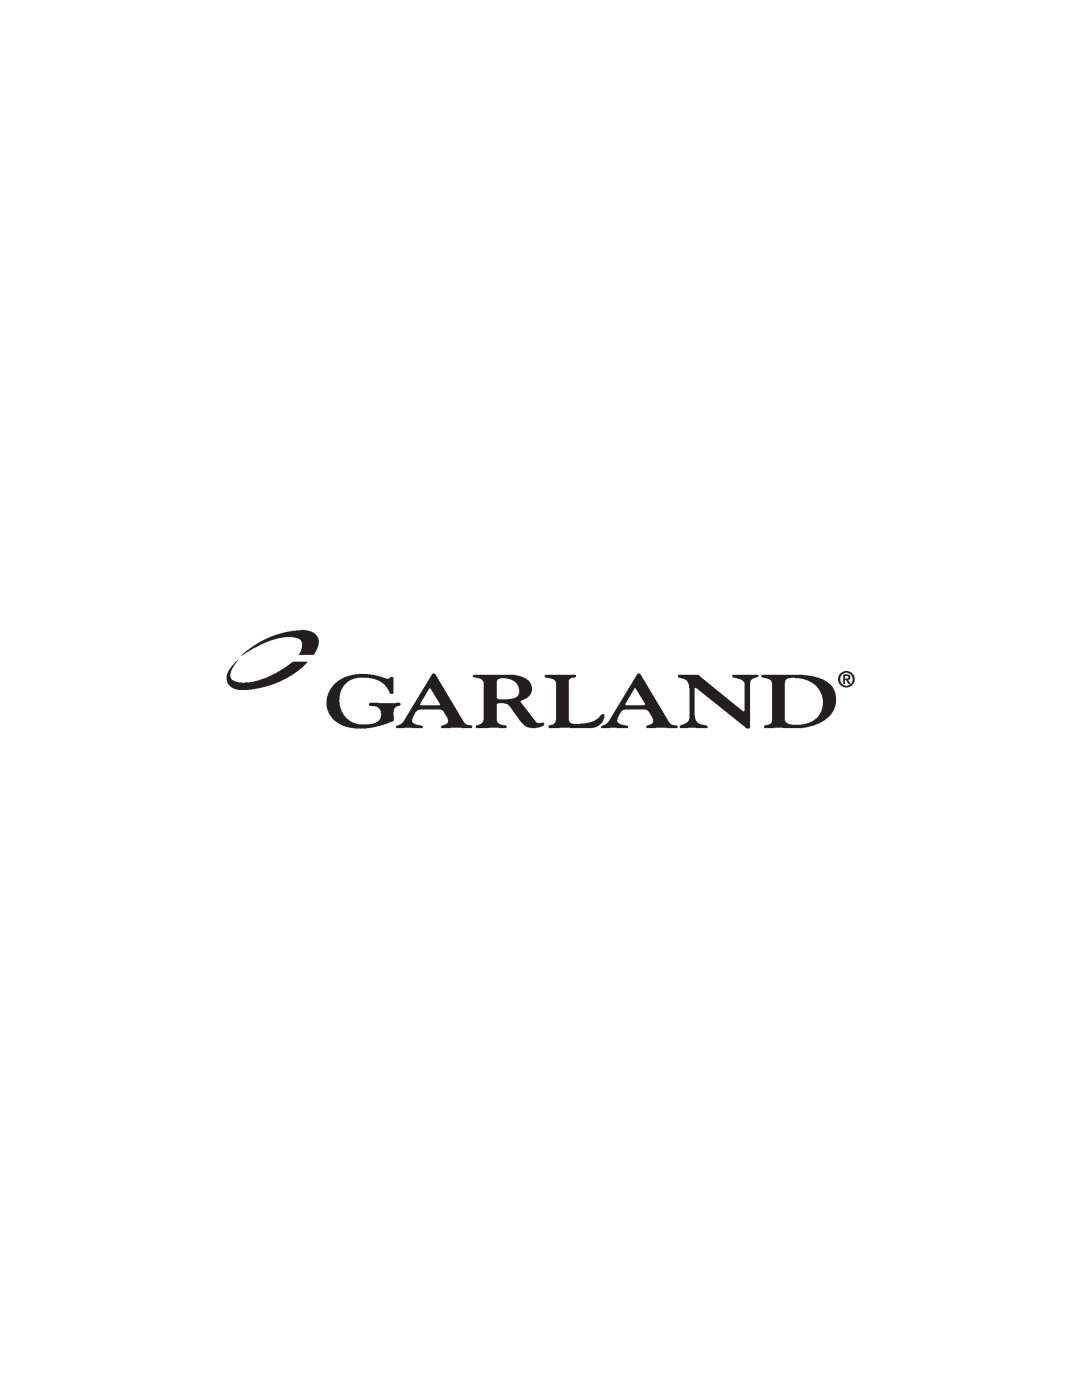 Garland E22-36 installation instructions 